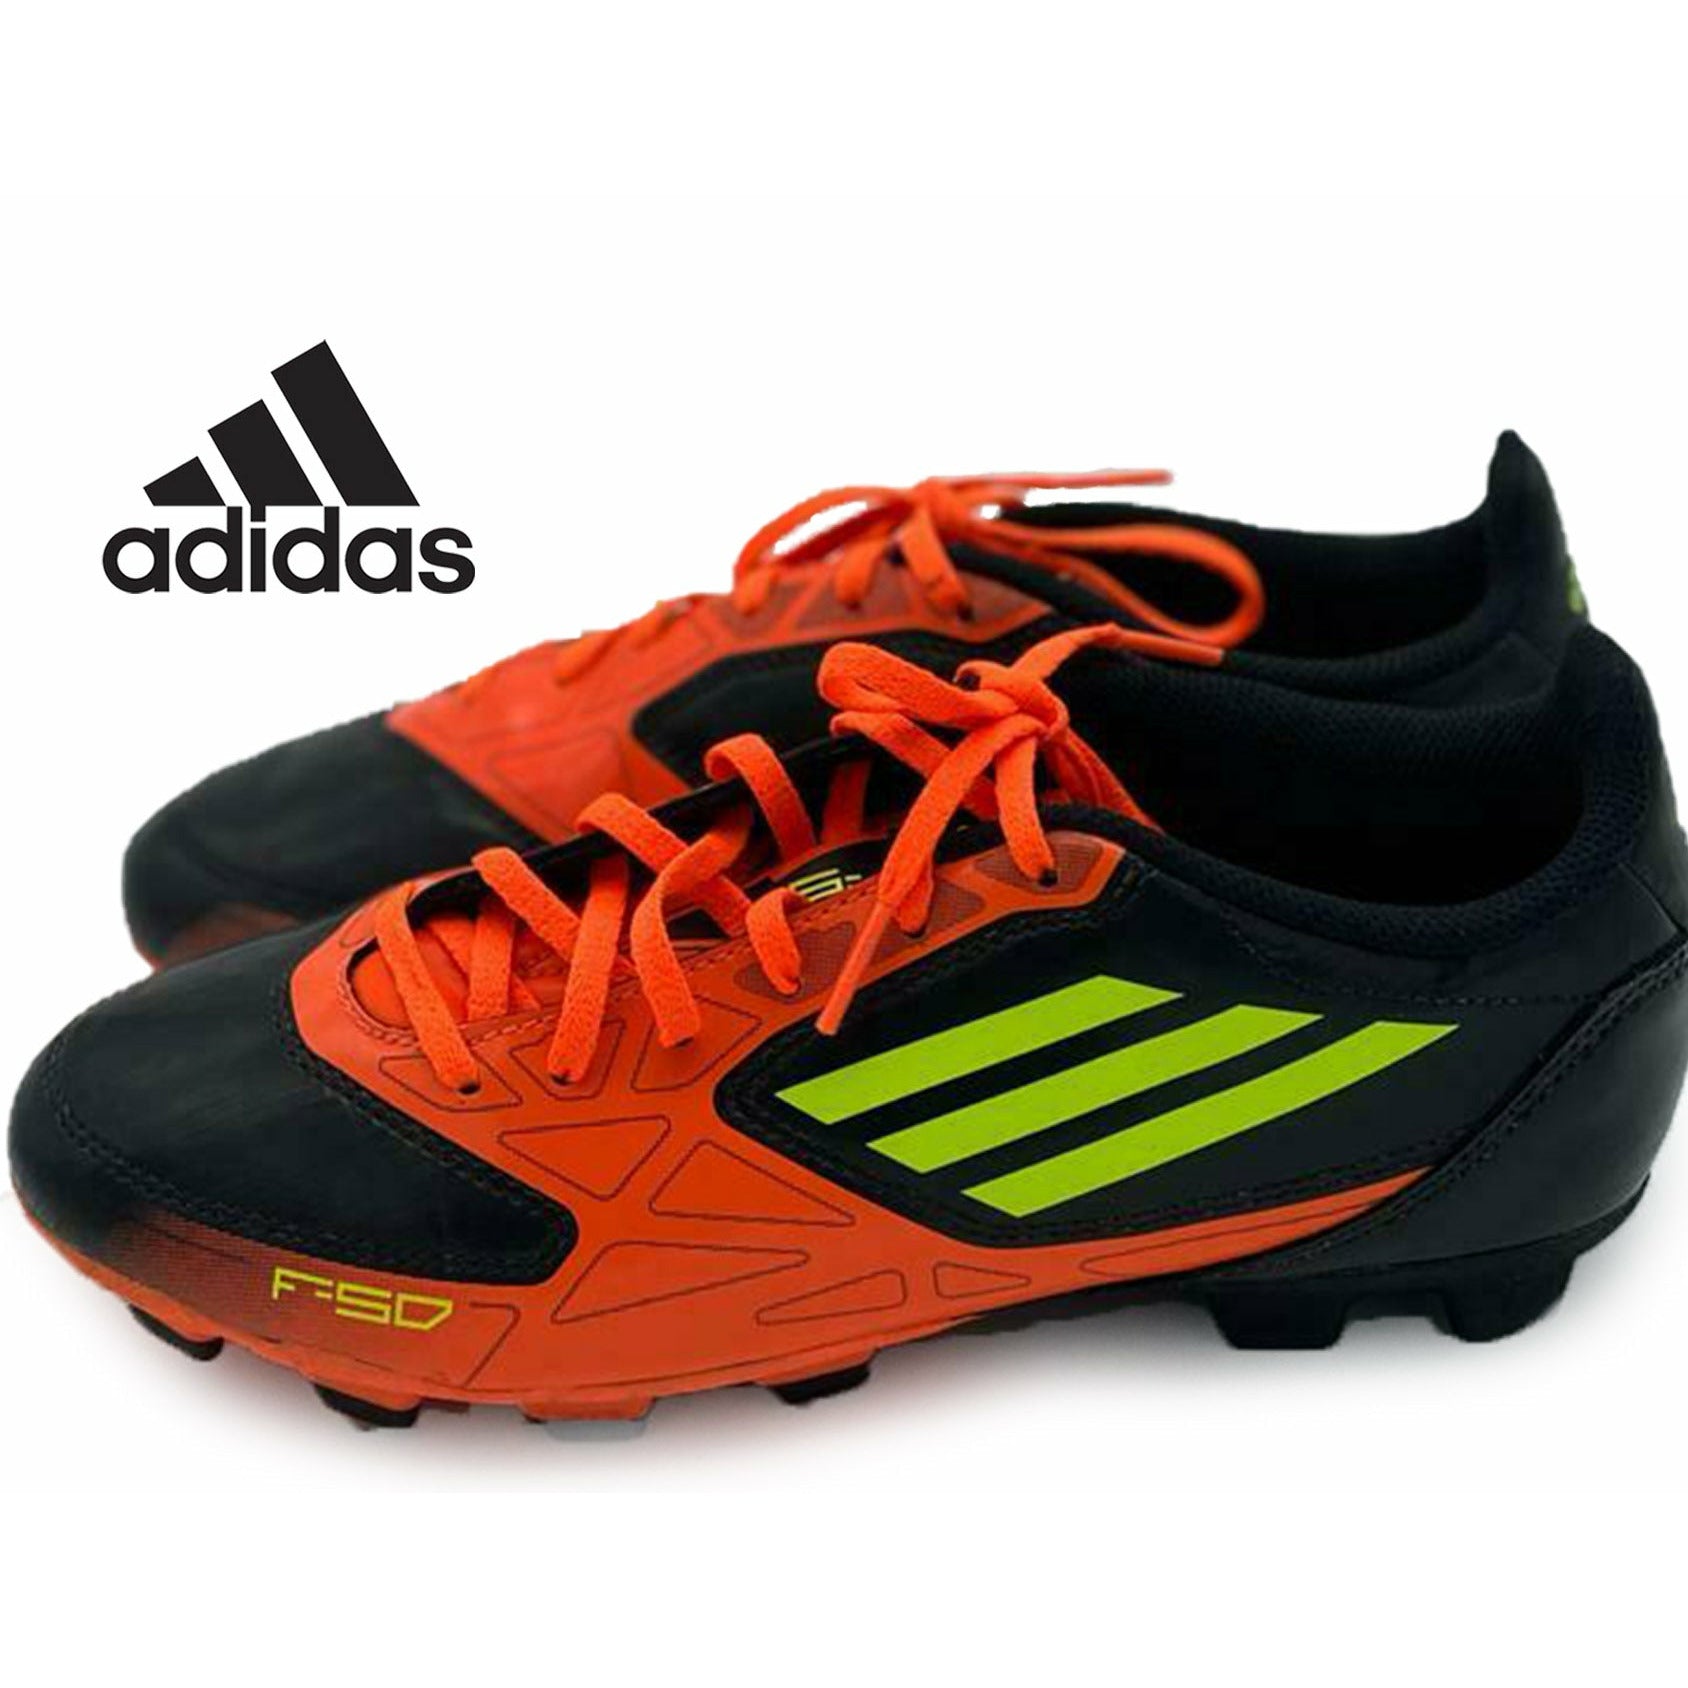 Adidas F5 TRX FG J Size 5 - TRX Soccer -Orange – - Vintage Clothing, Accessories & Wholesale